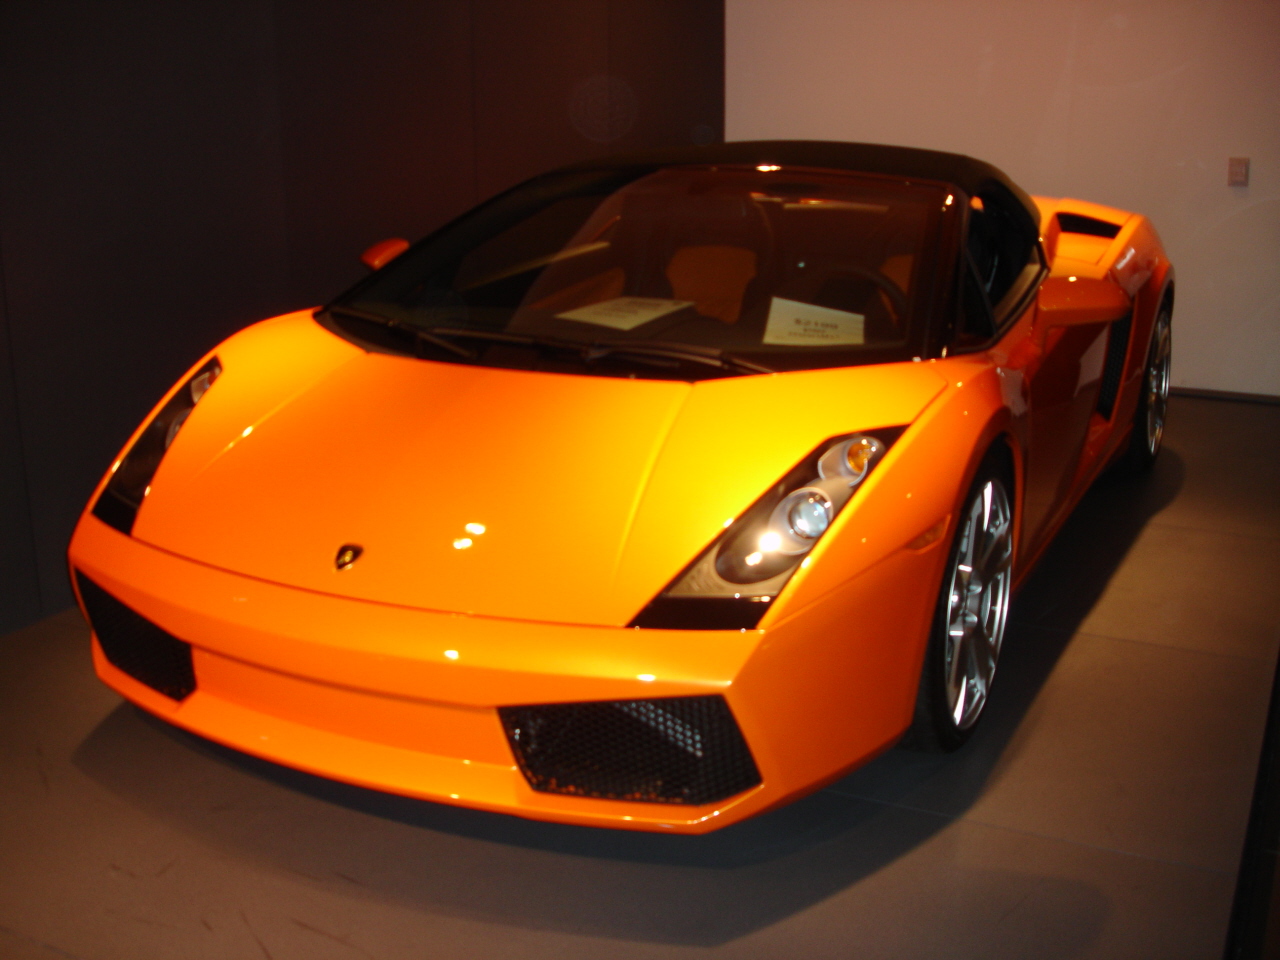 Visita al Museo Lamborghini Las Vegas/ Visit to Lamborghini Museum LasVegas-Lamborghini11.JPG